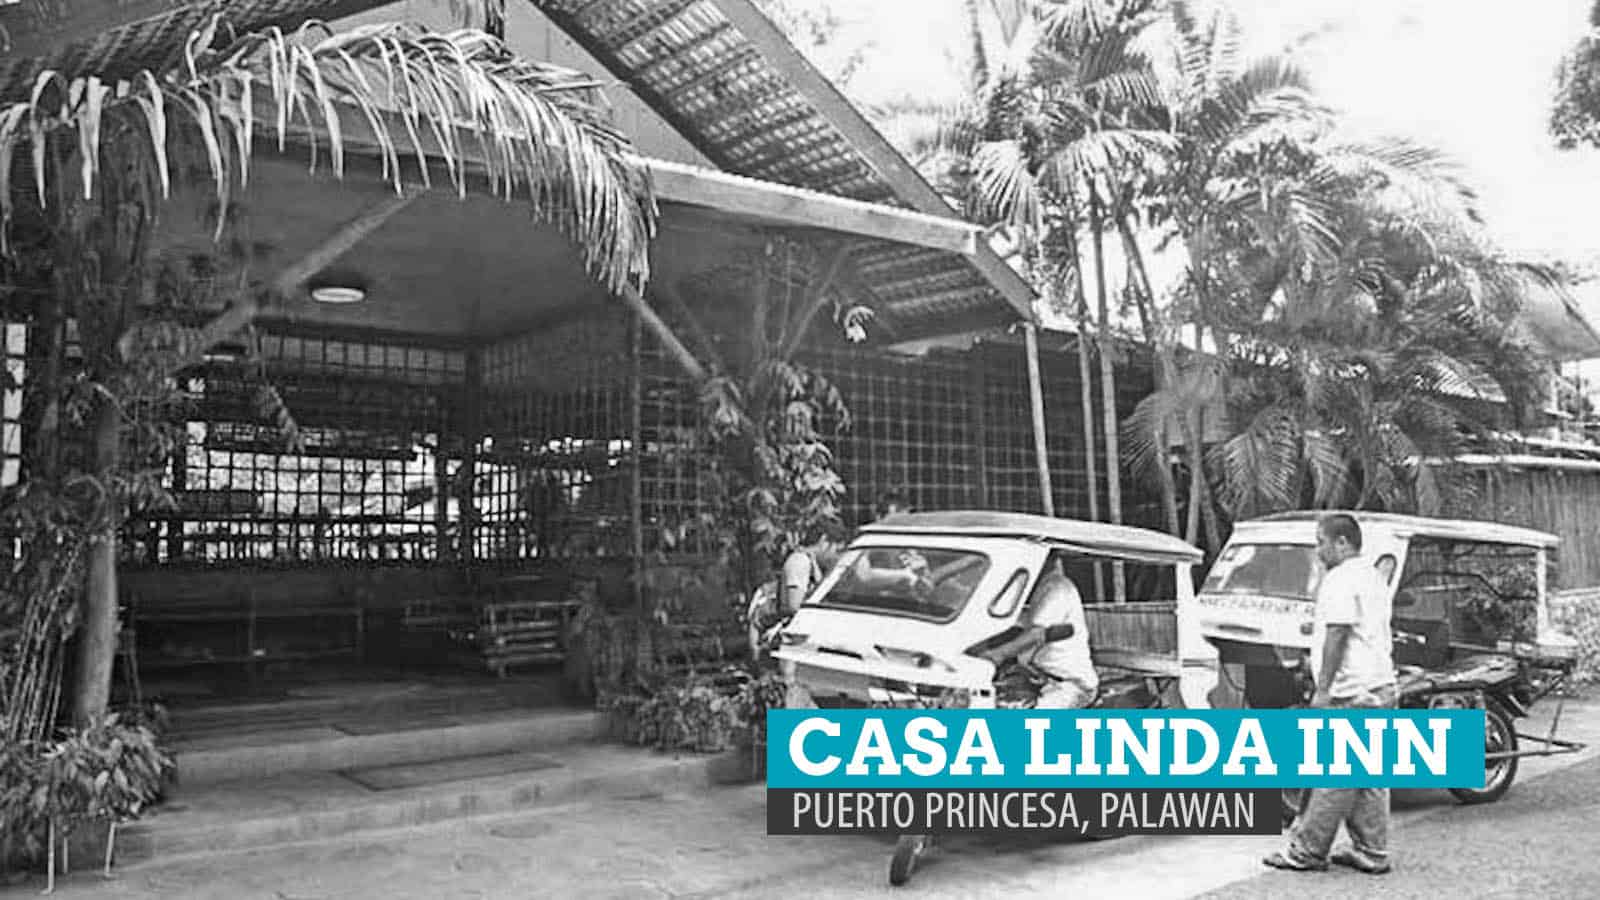 Casa琳达客栈:留在普林塞萨,菲律宾巴拉望省